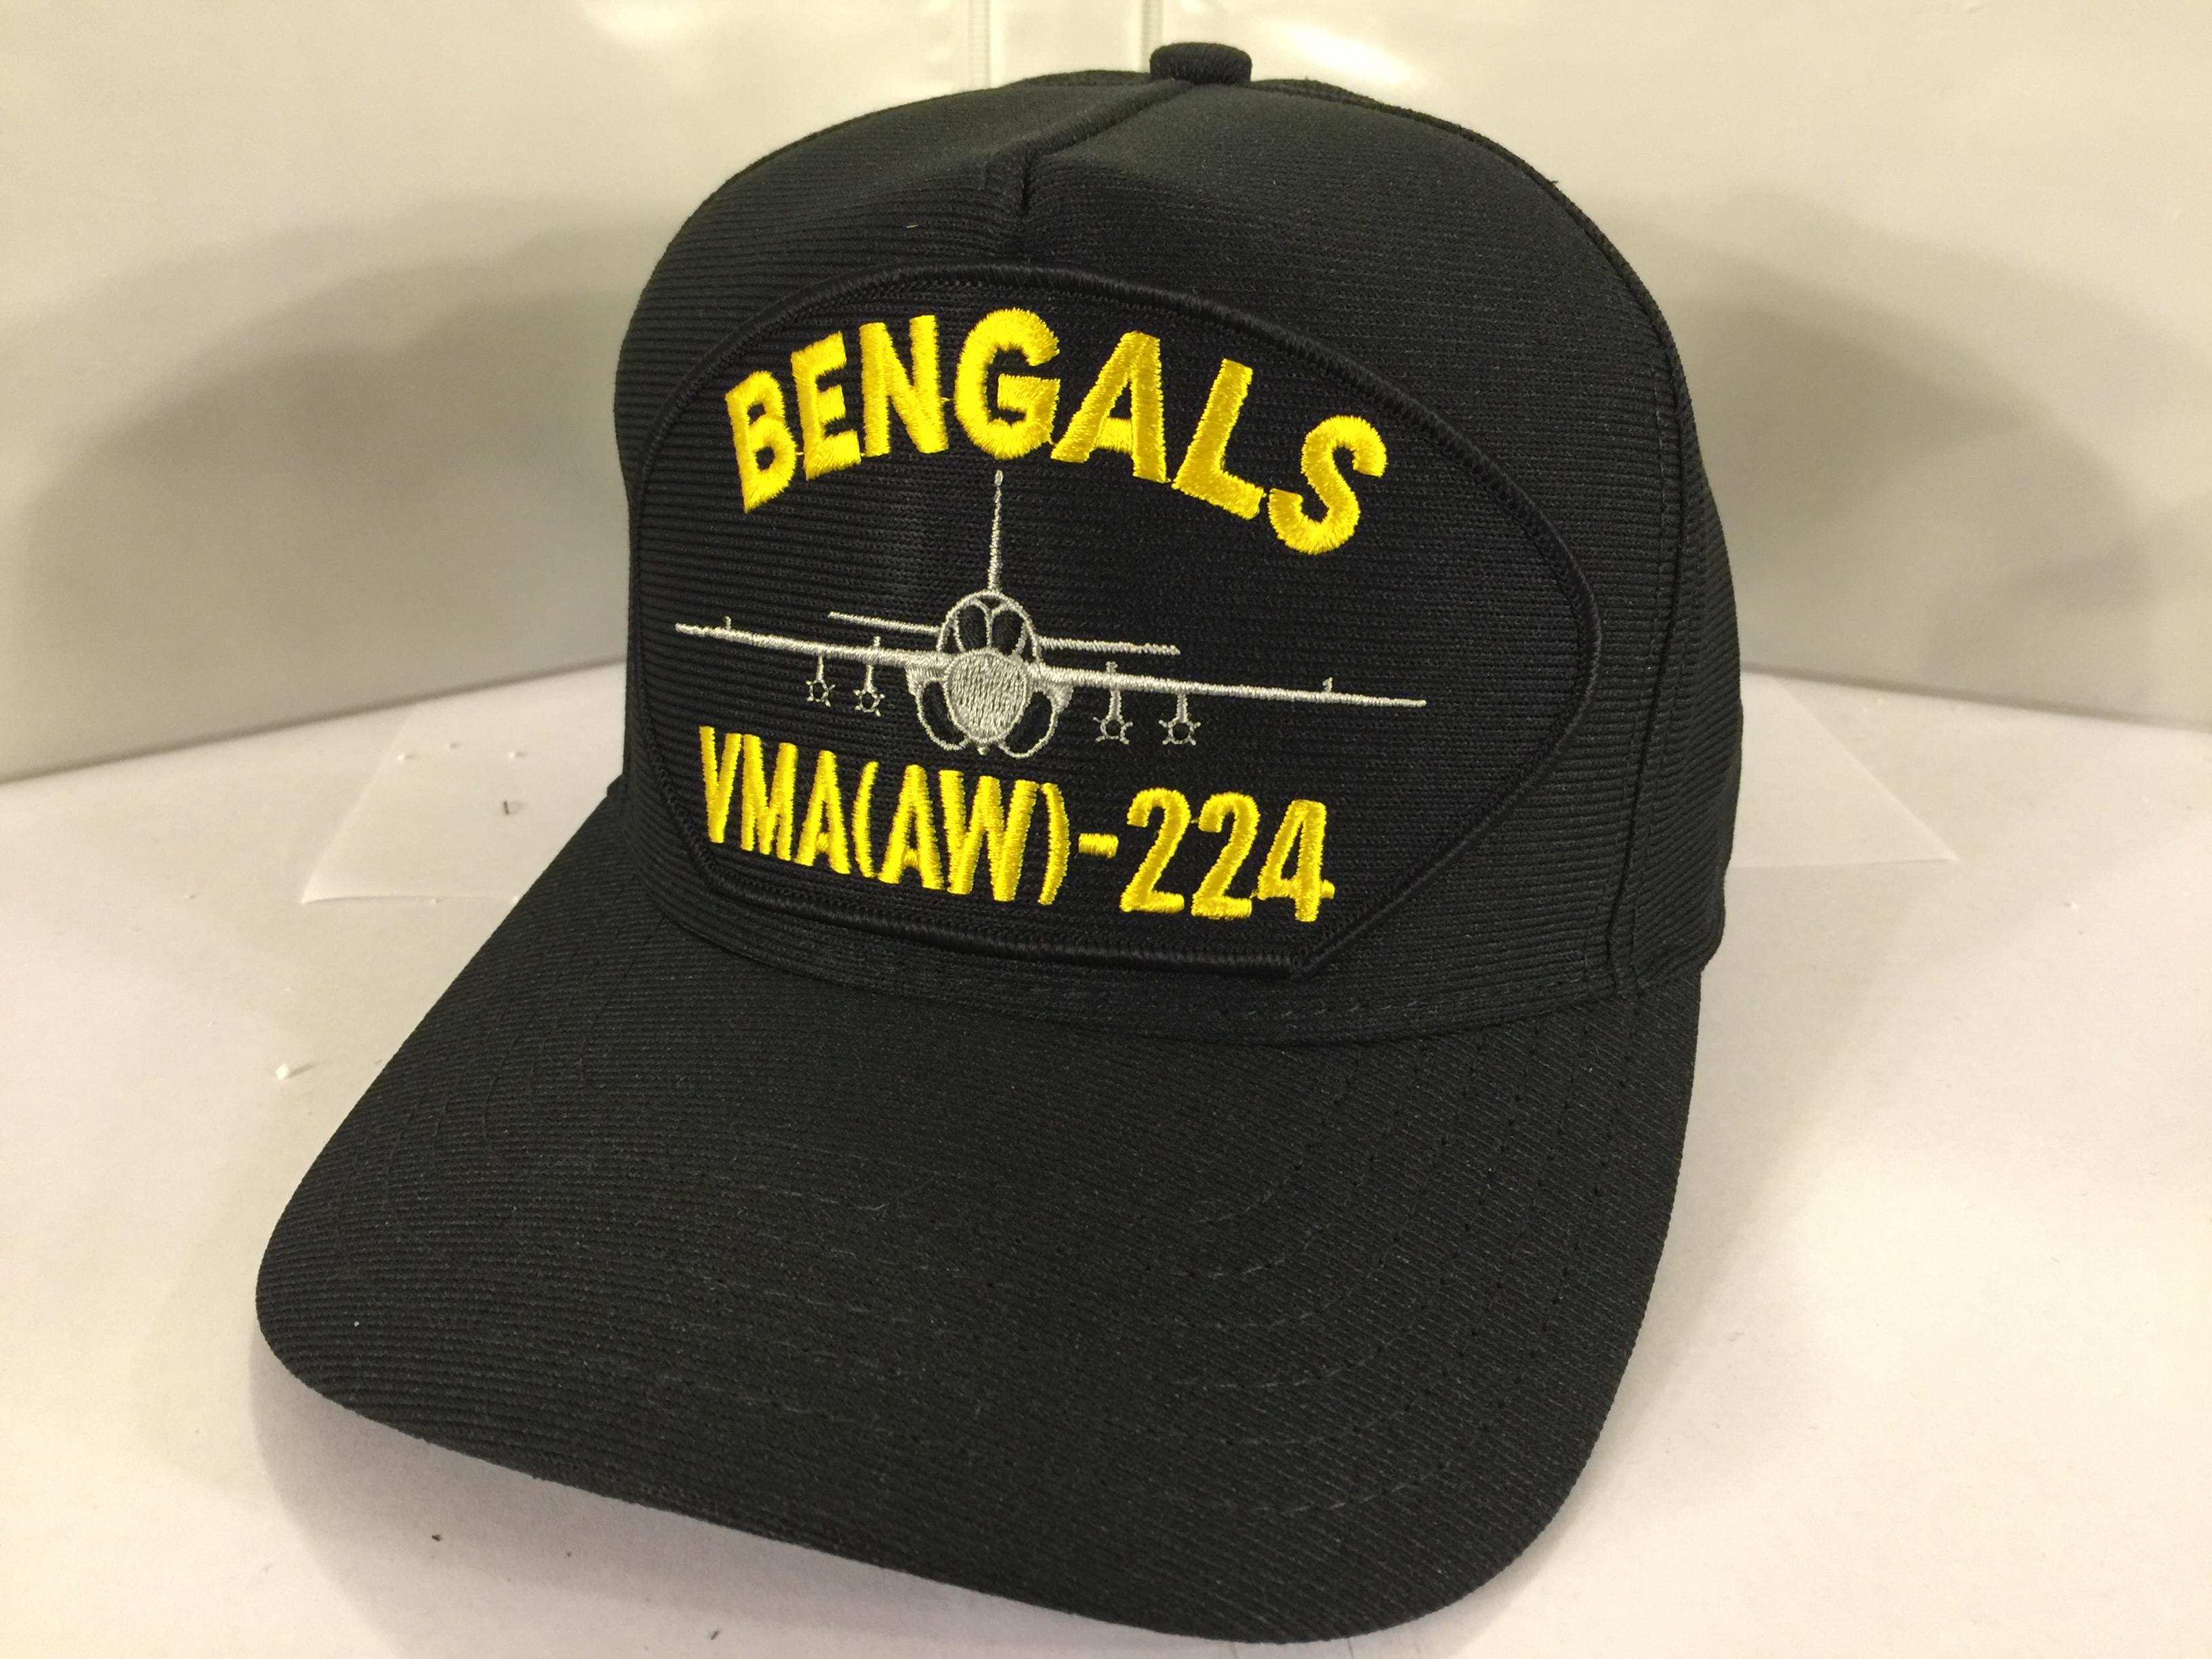 USMC VMA(AW)-224 BENGALS Ballcap (Black)